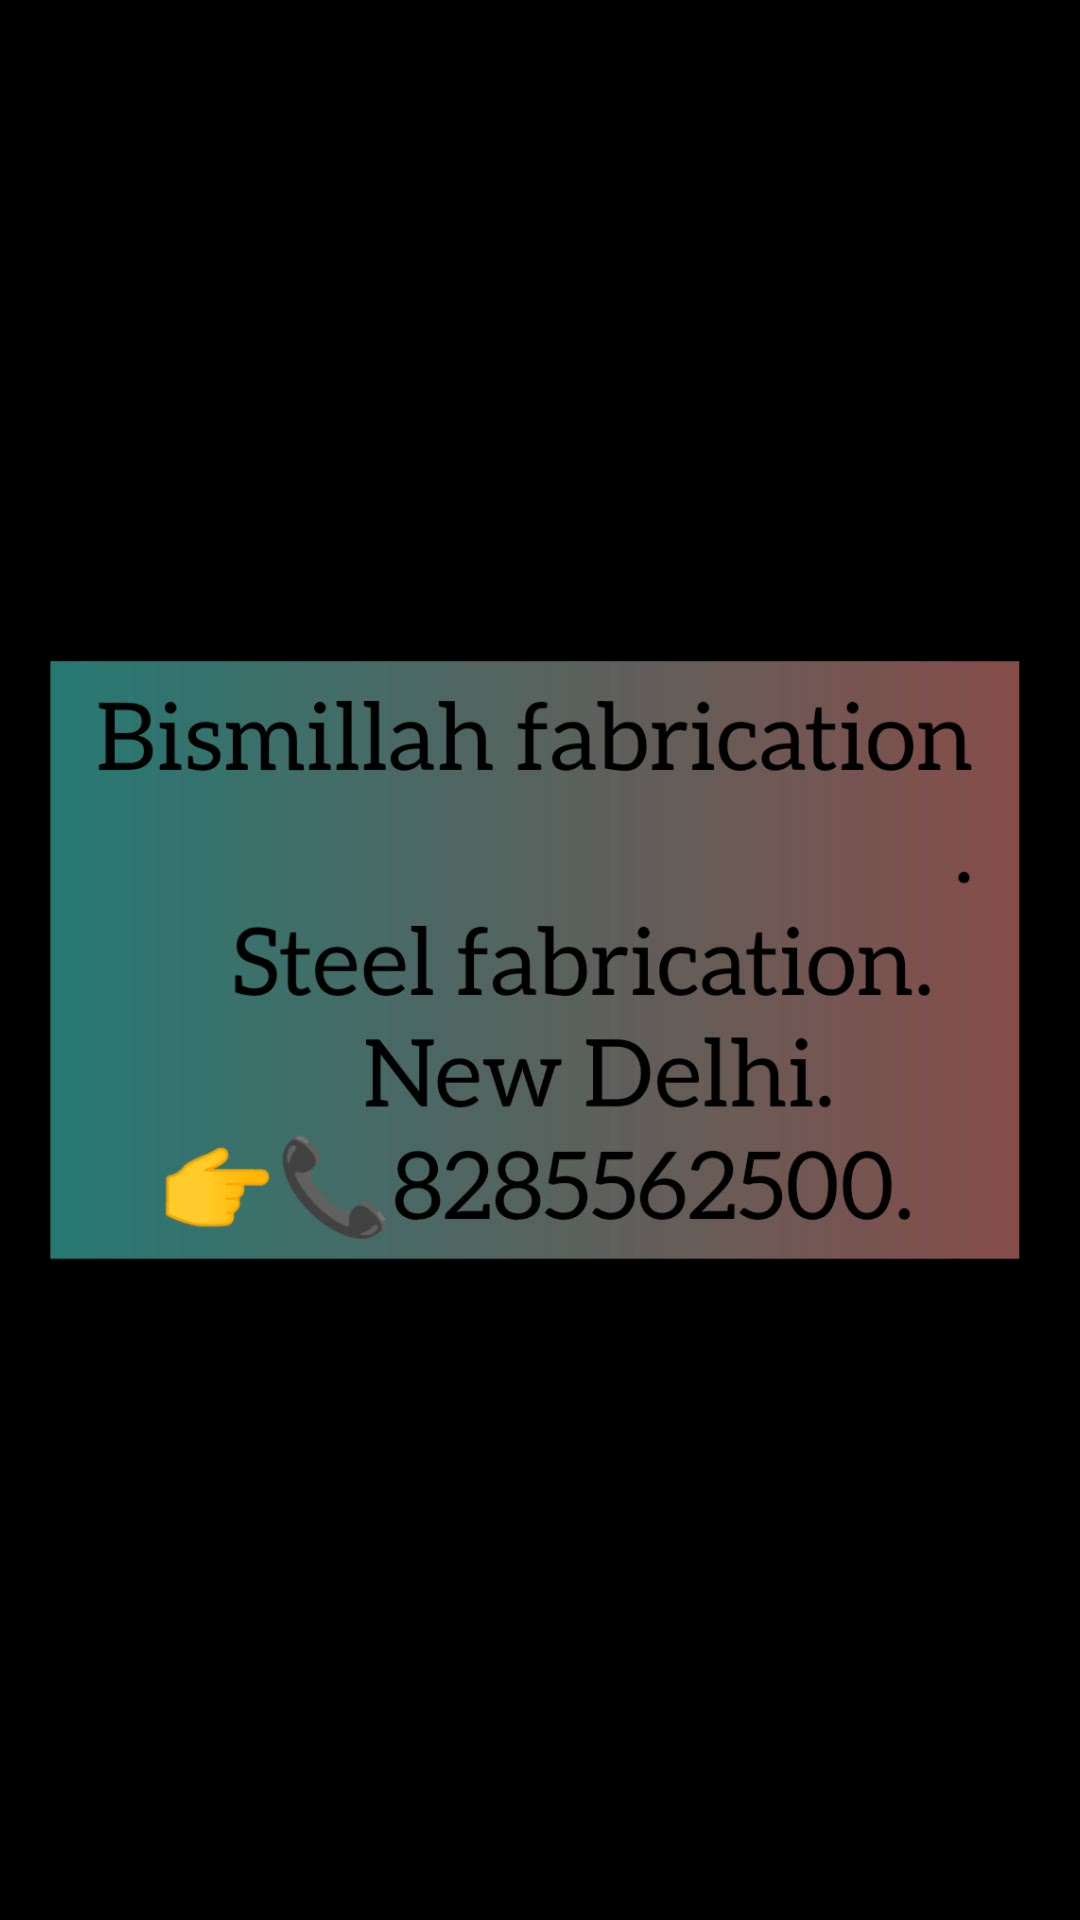 modern steel gate design 👉🥰🤷‍♂️
watsapp no👉📞 8285562500
Bismillah fabrication welding work
location khureji khas Krishna Nagar
.
.
.
.
.
.
. #steelgatedesign  #steelgate  #steelwork  #TATA_STEEL  #steelkolodesingn  #trendingdesign  #trendinghomedecor  #
 #kolohindi  #koloapp  #kolofolowers  #trendingkoloaap  #trendingdesigns  #trendingreels😍😍  #exploremore  #steelgatedesign